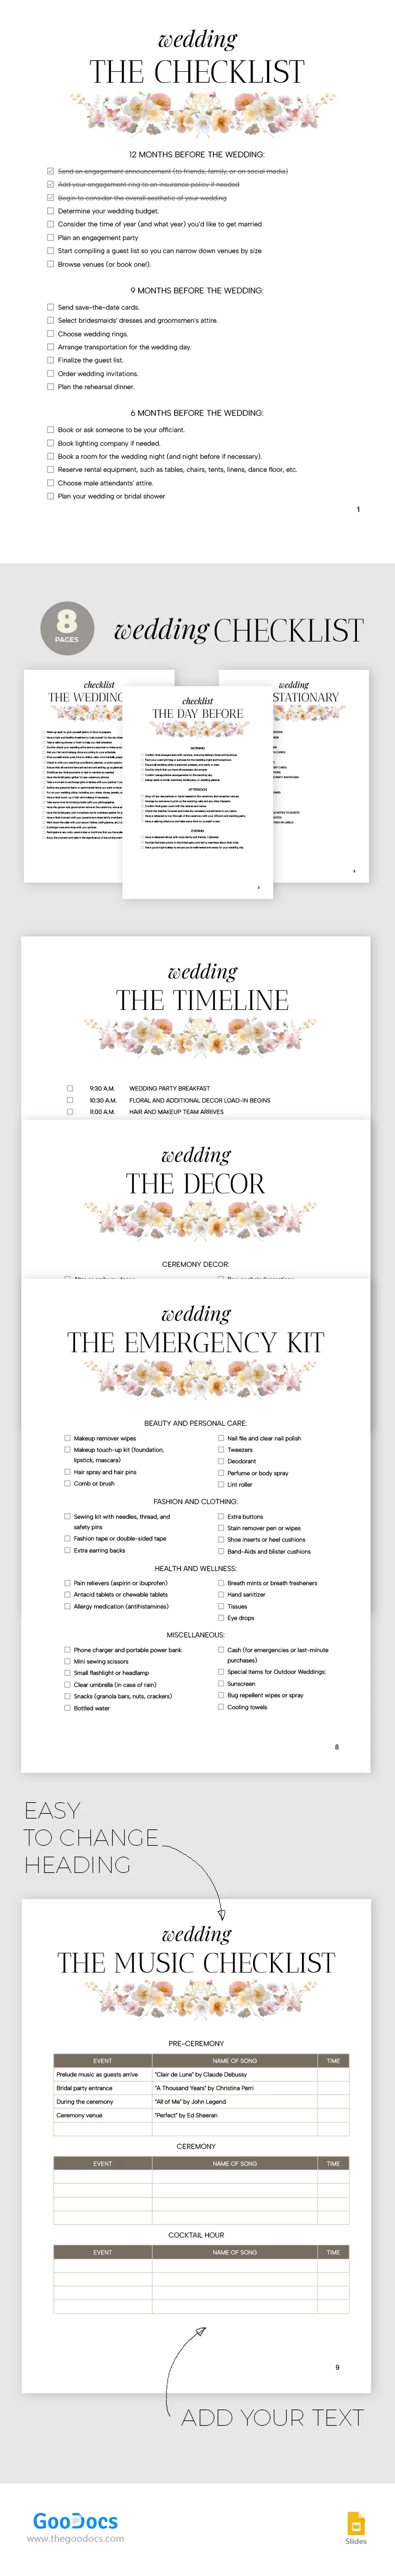 Wedding Checklist - free Google Docs Template - 10068478